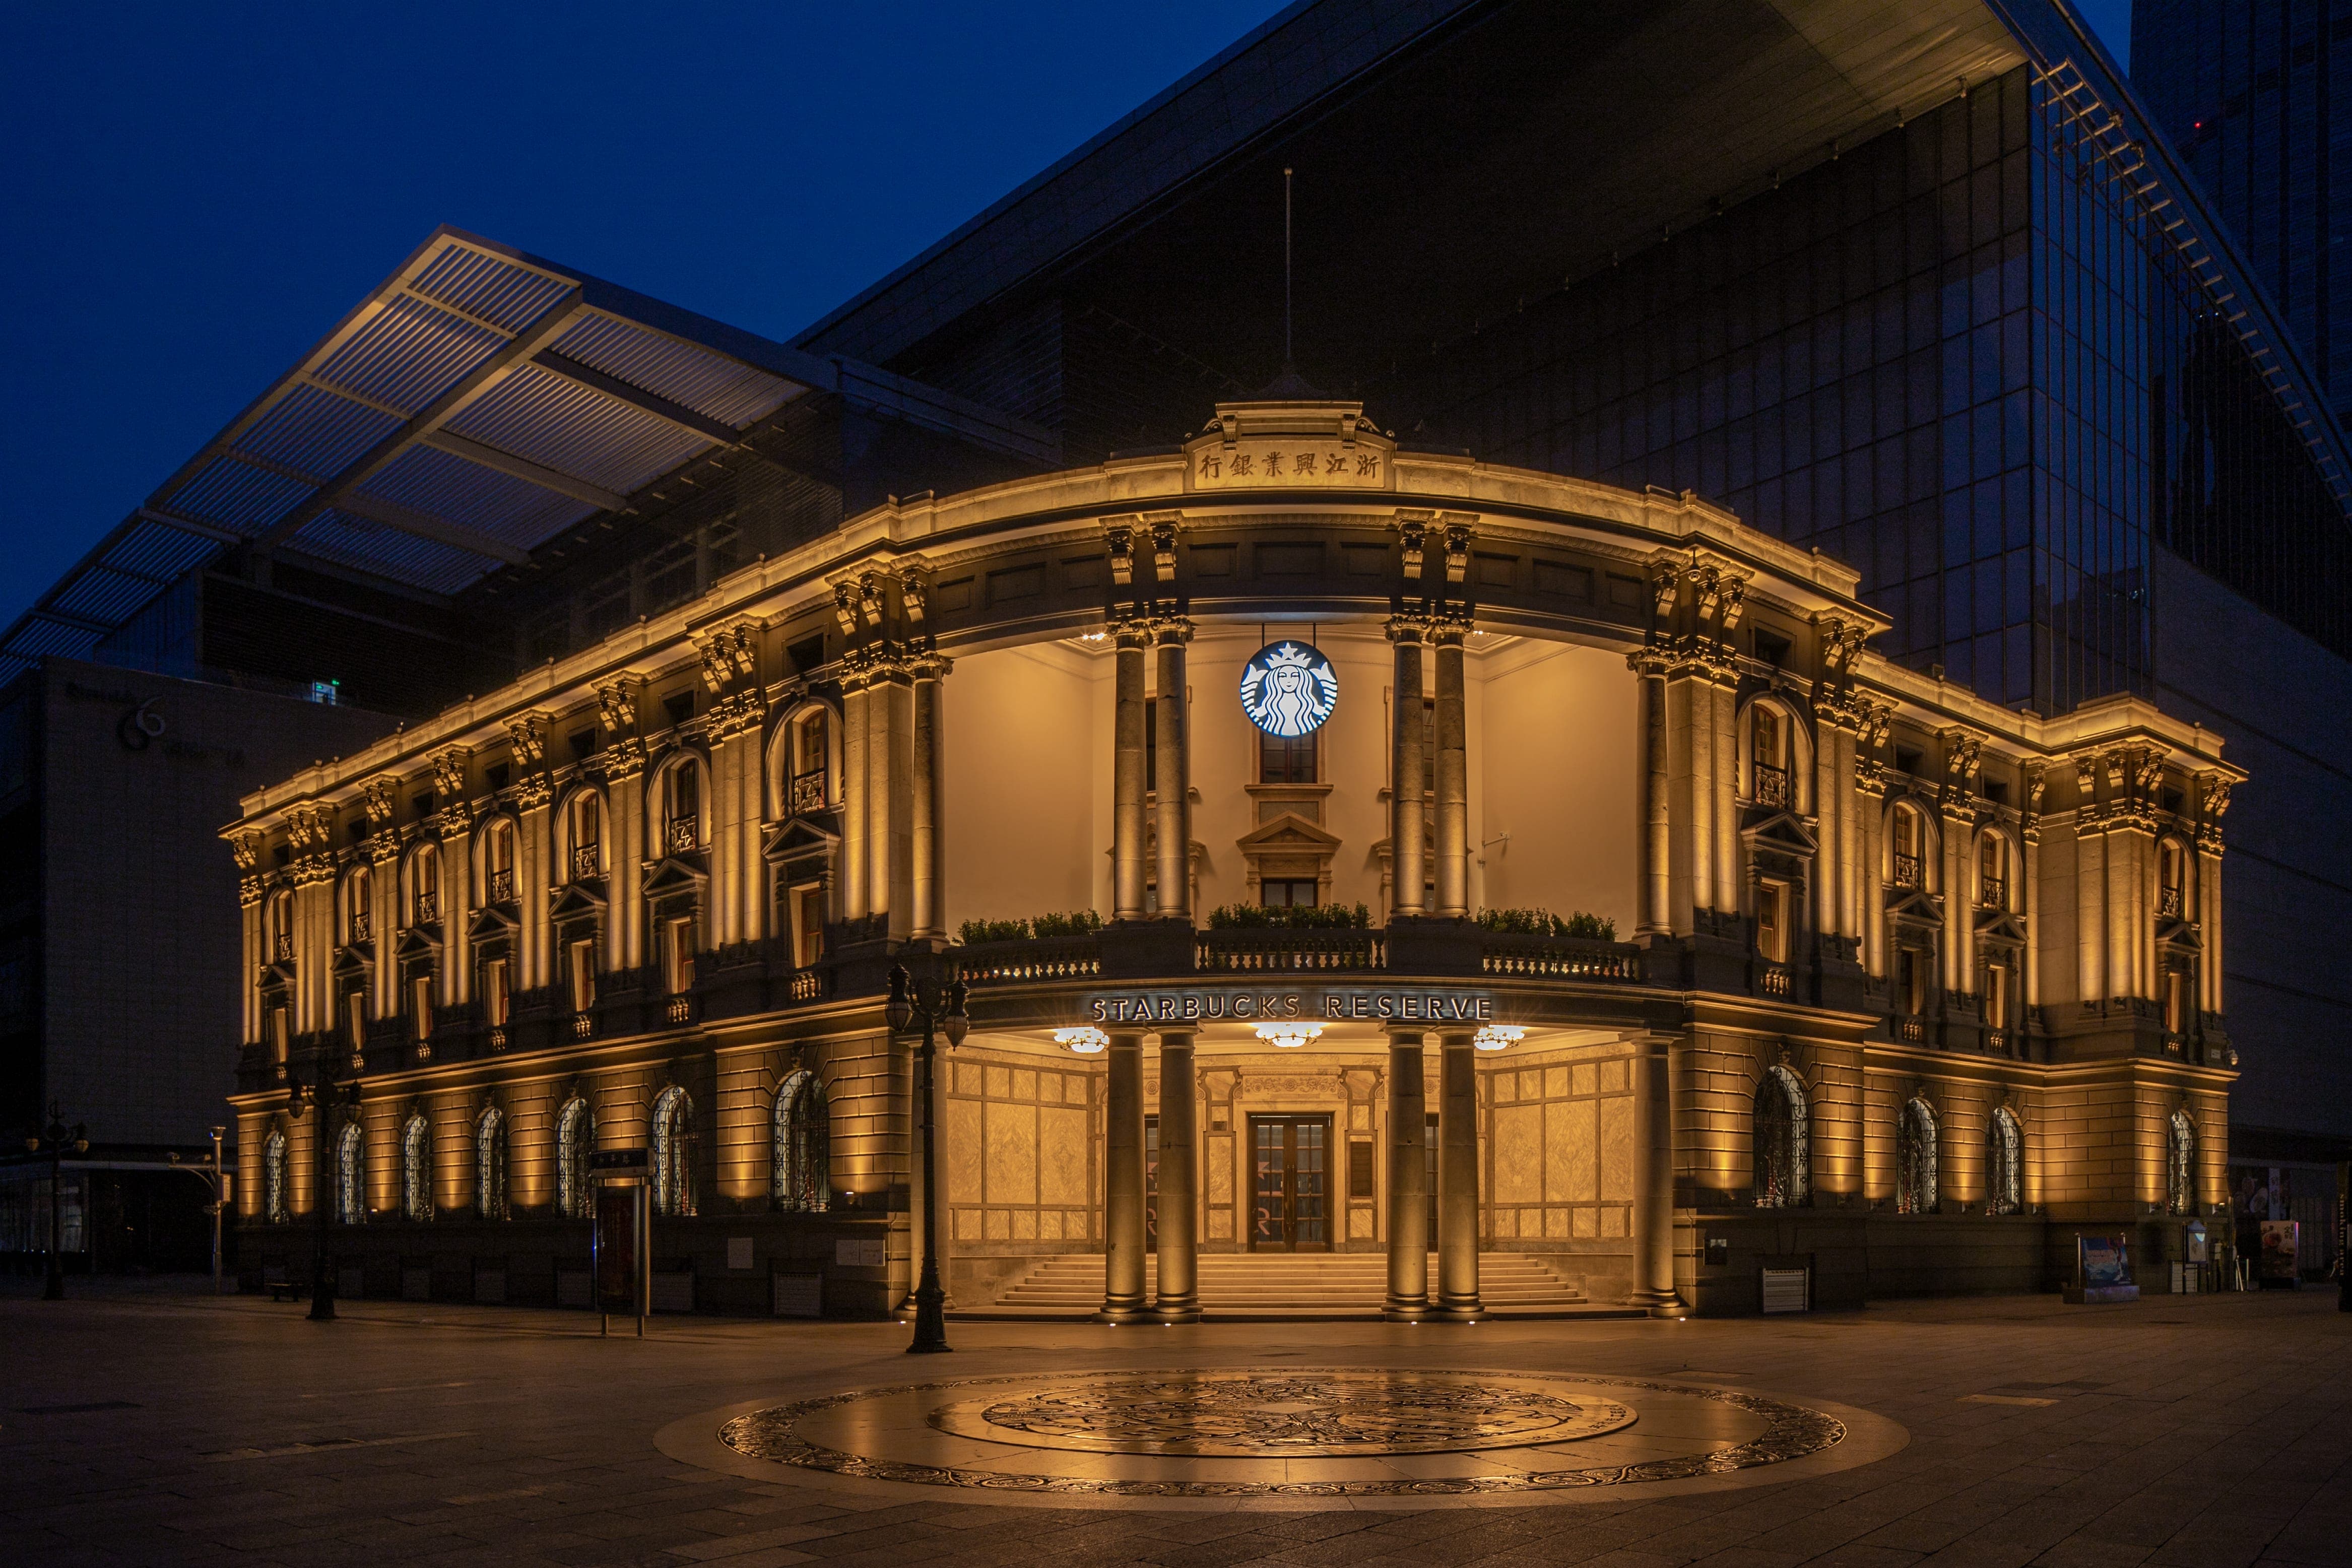 Exterior façade of the Starbucks Reserve Tianjin Riverside 66 Flagship store at night